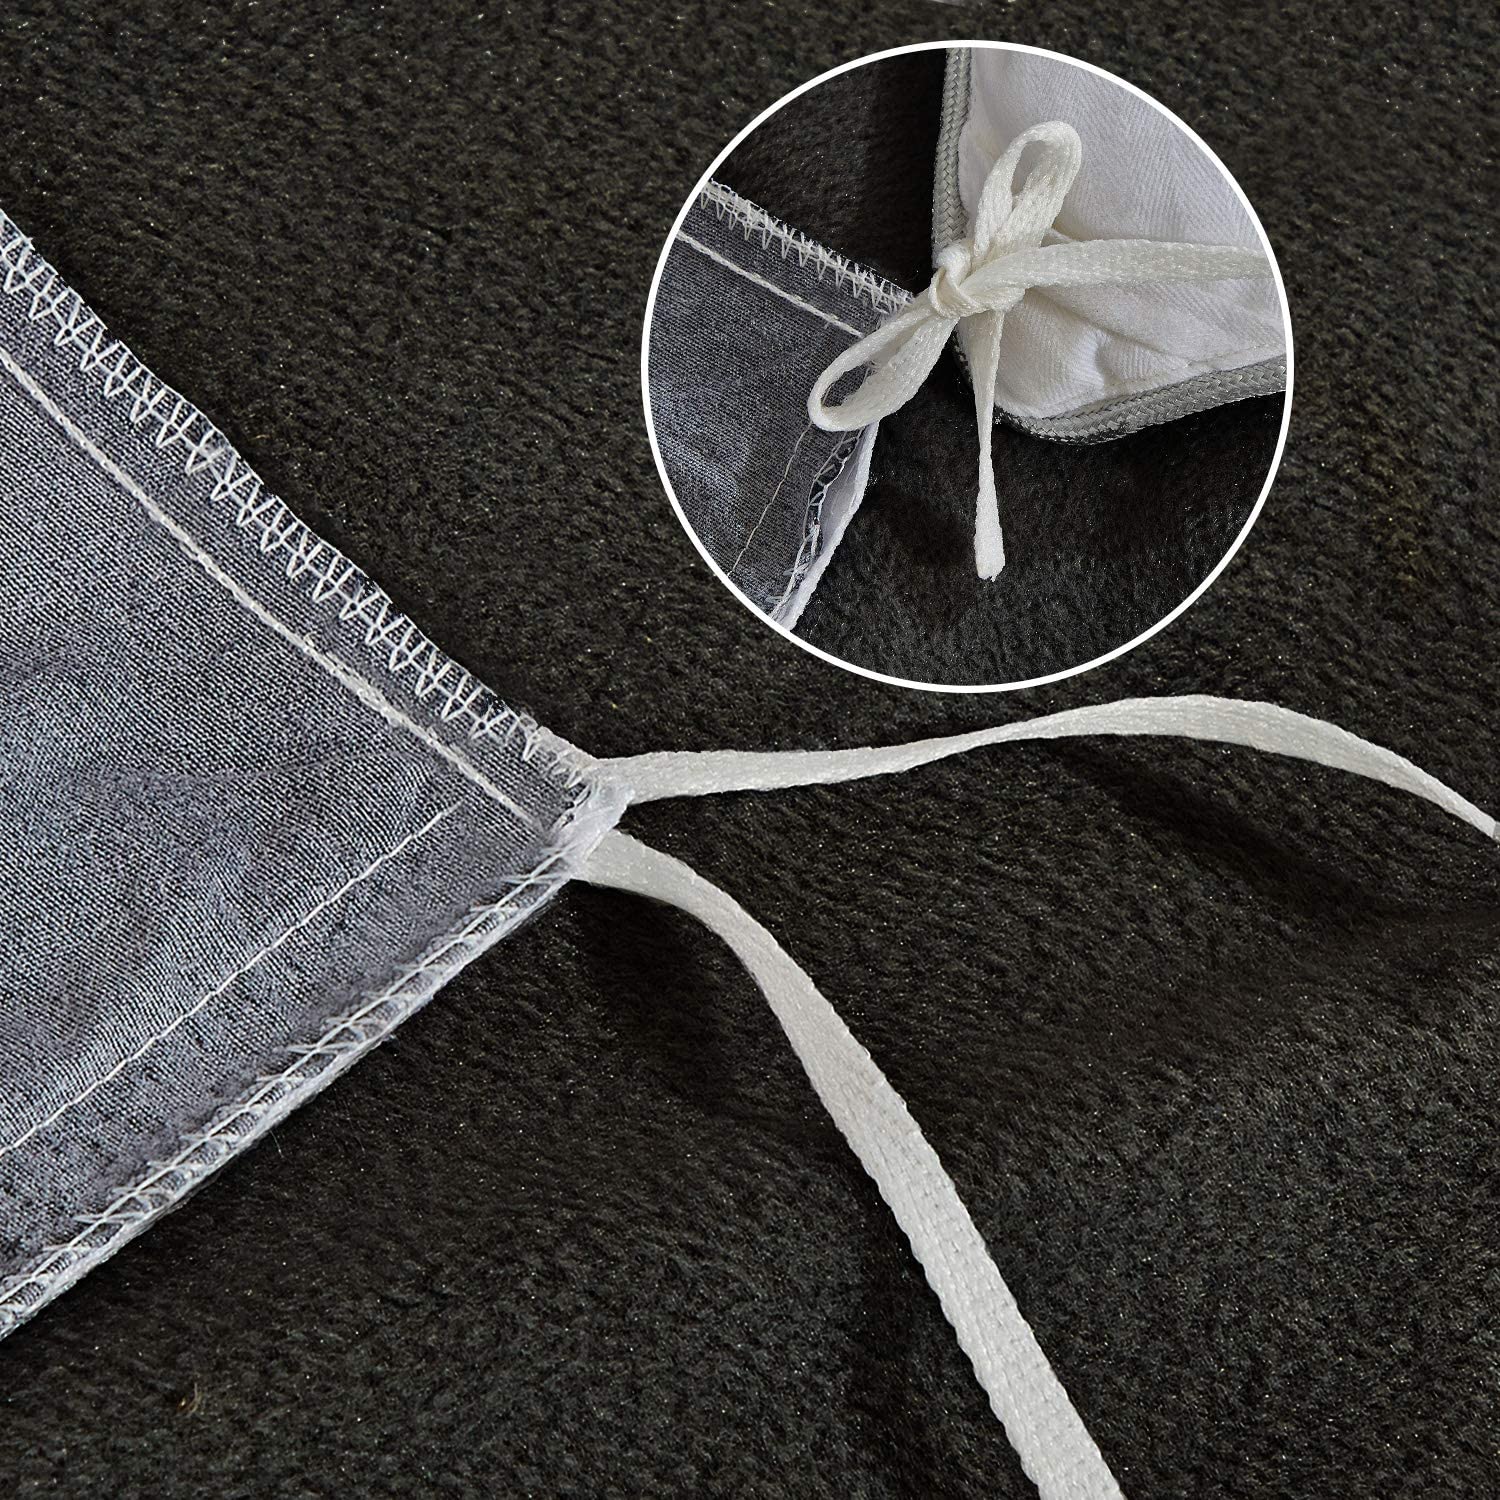 Duvet Cover Polka Dots Comforter Cover Zipper Closure,Soft Microfiber Bedding Set Reversible Design